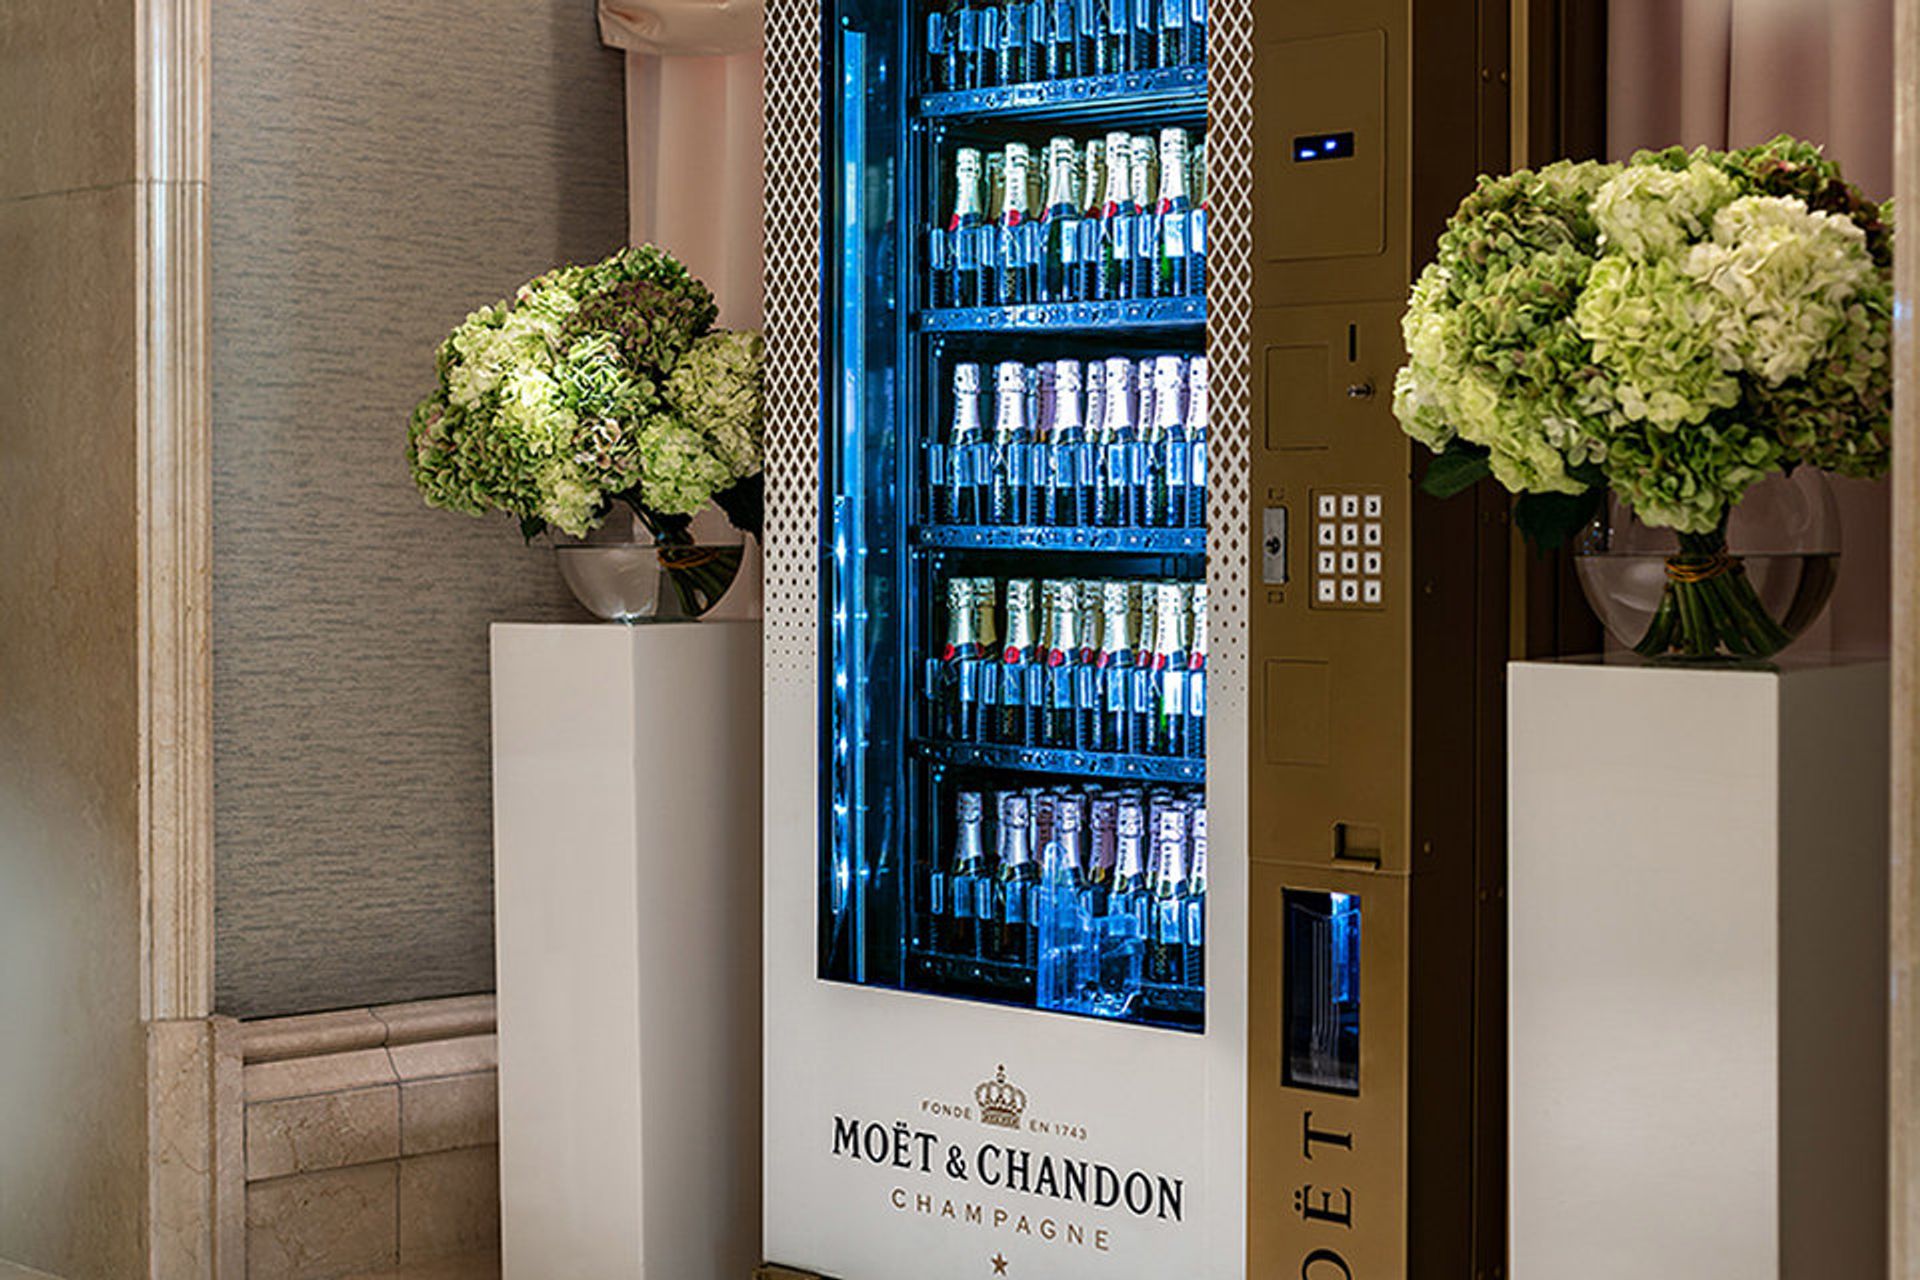 Ritz-Carlton Moët & Chandon Champagne Vending Machine Gewoonvoorhem